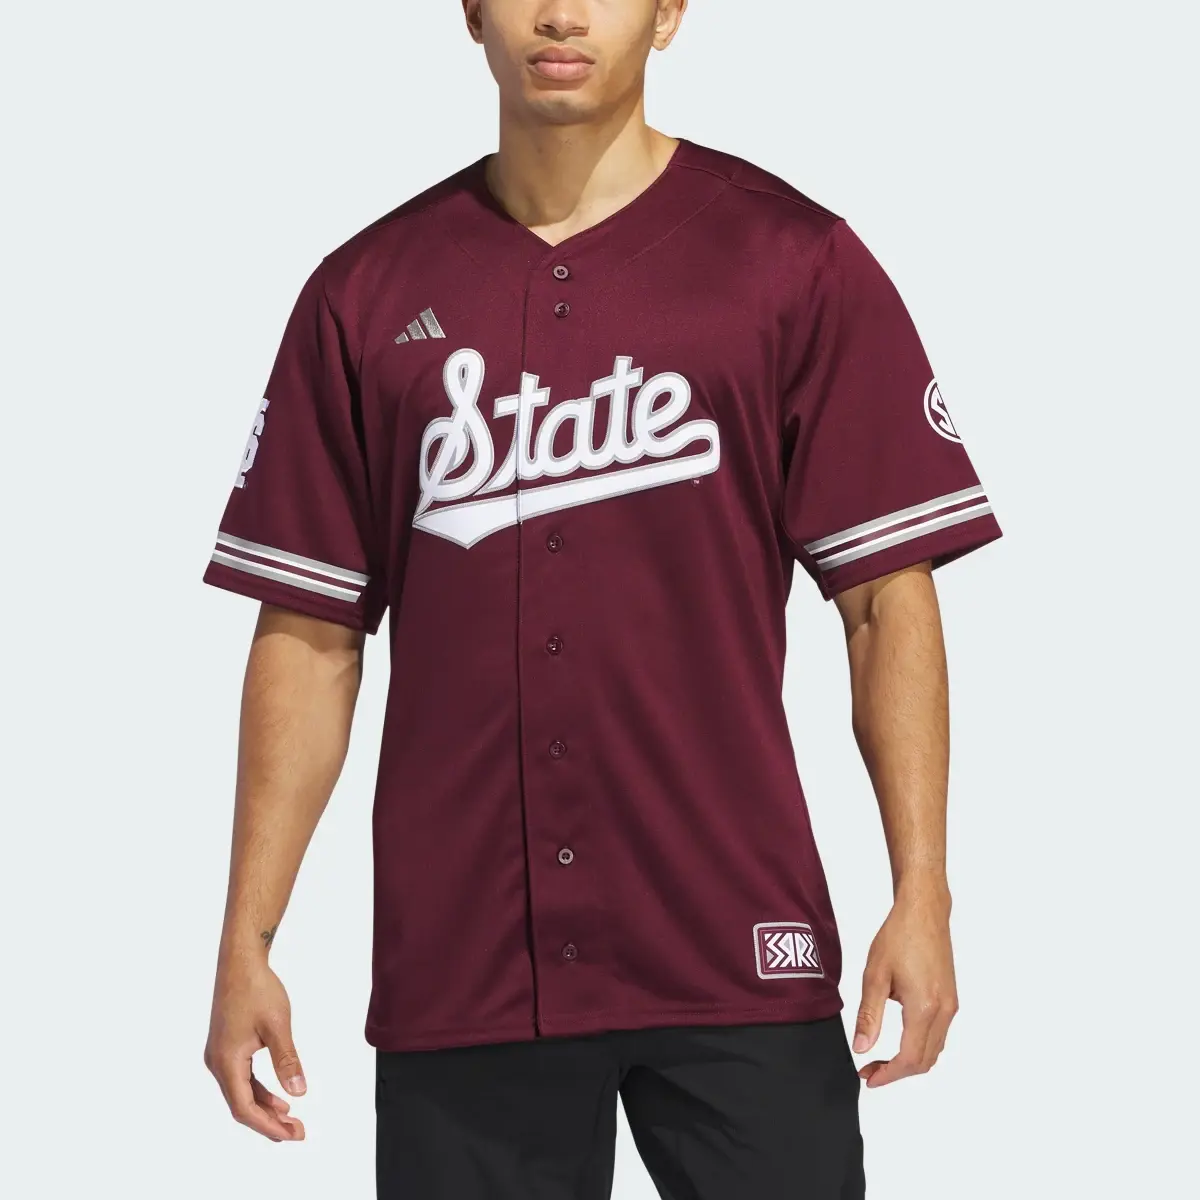 Adidas Mississippi State Reverse Retro Replica Baseball Jersey. 1